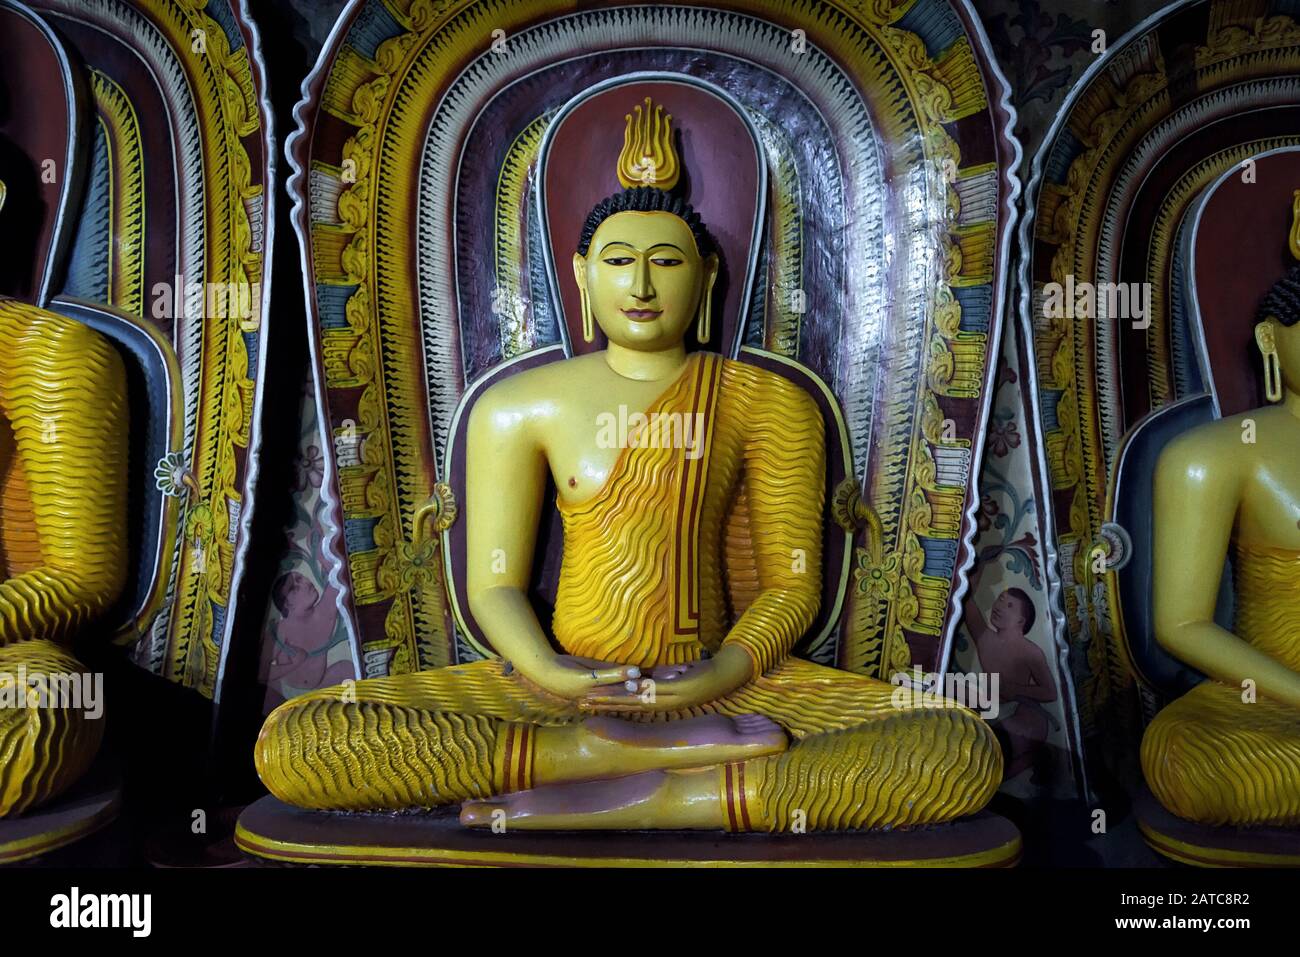 Mulkirigala, Sri Lanka - 4. November 2017: Statue des sitzenden Buddha im alten buddhistischen Höhlentempel - Mulkirigala Raja Maha Vihara. Stockfoto